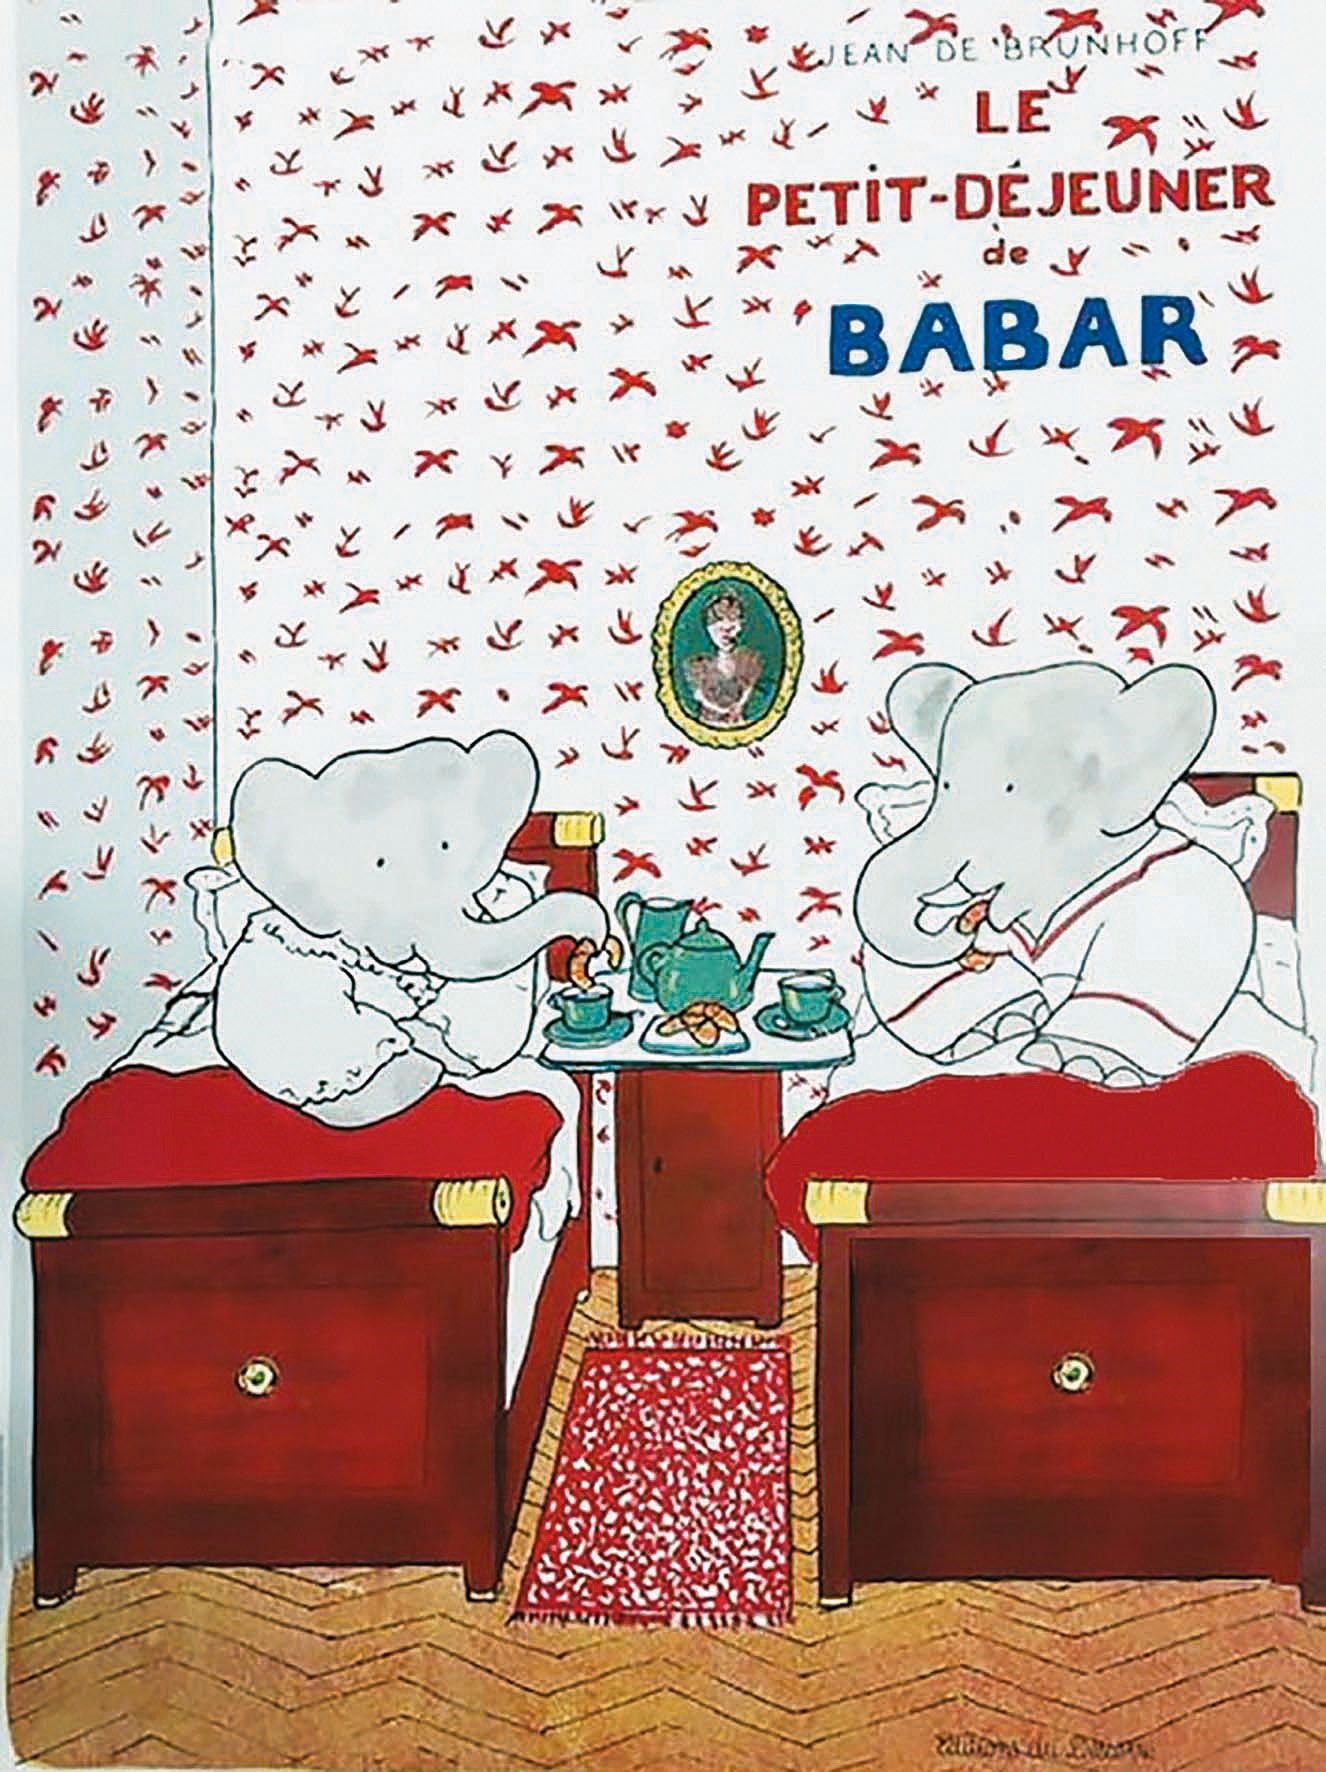 Babar en Avion 1989年 ブリュノフ アートポスター-